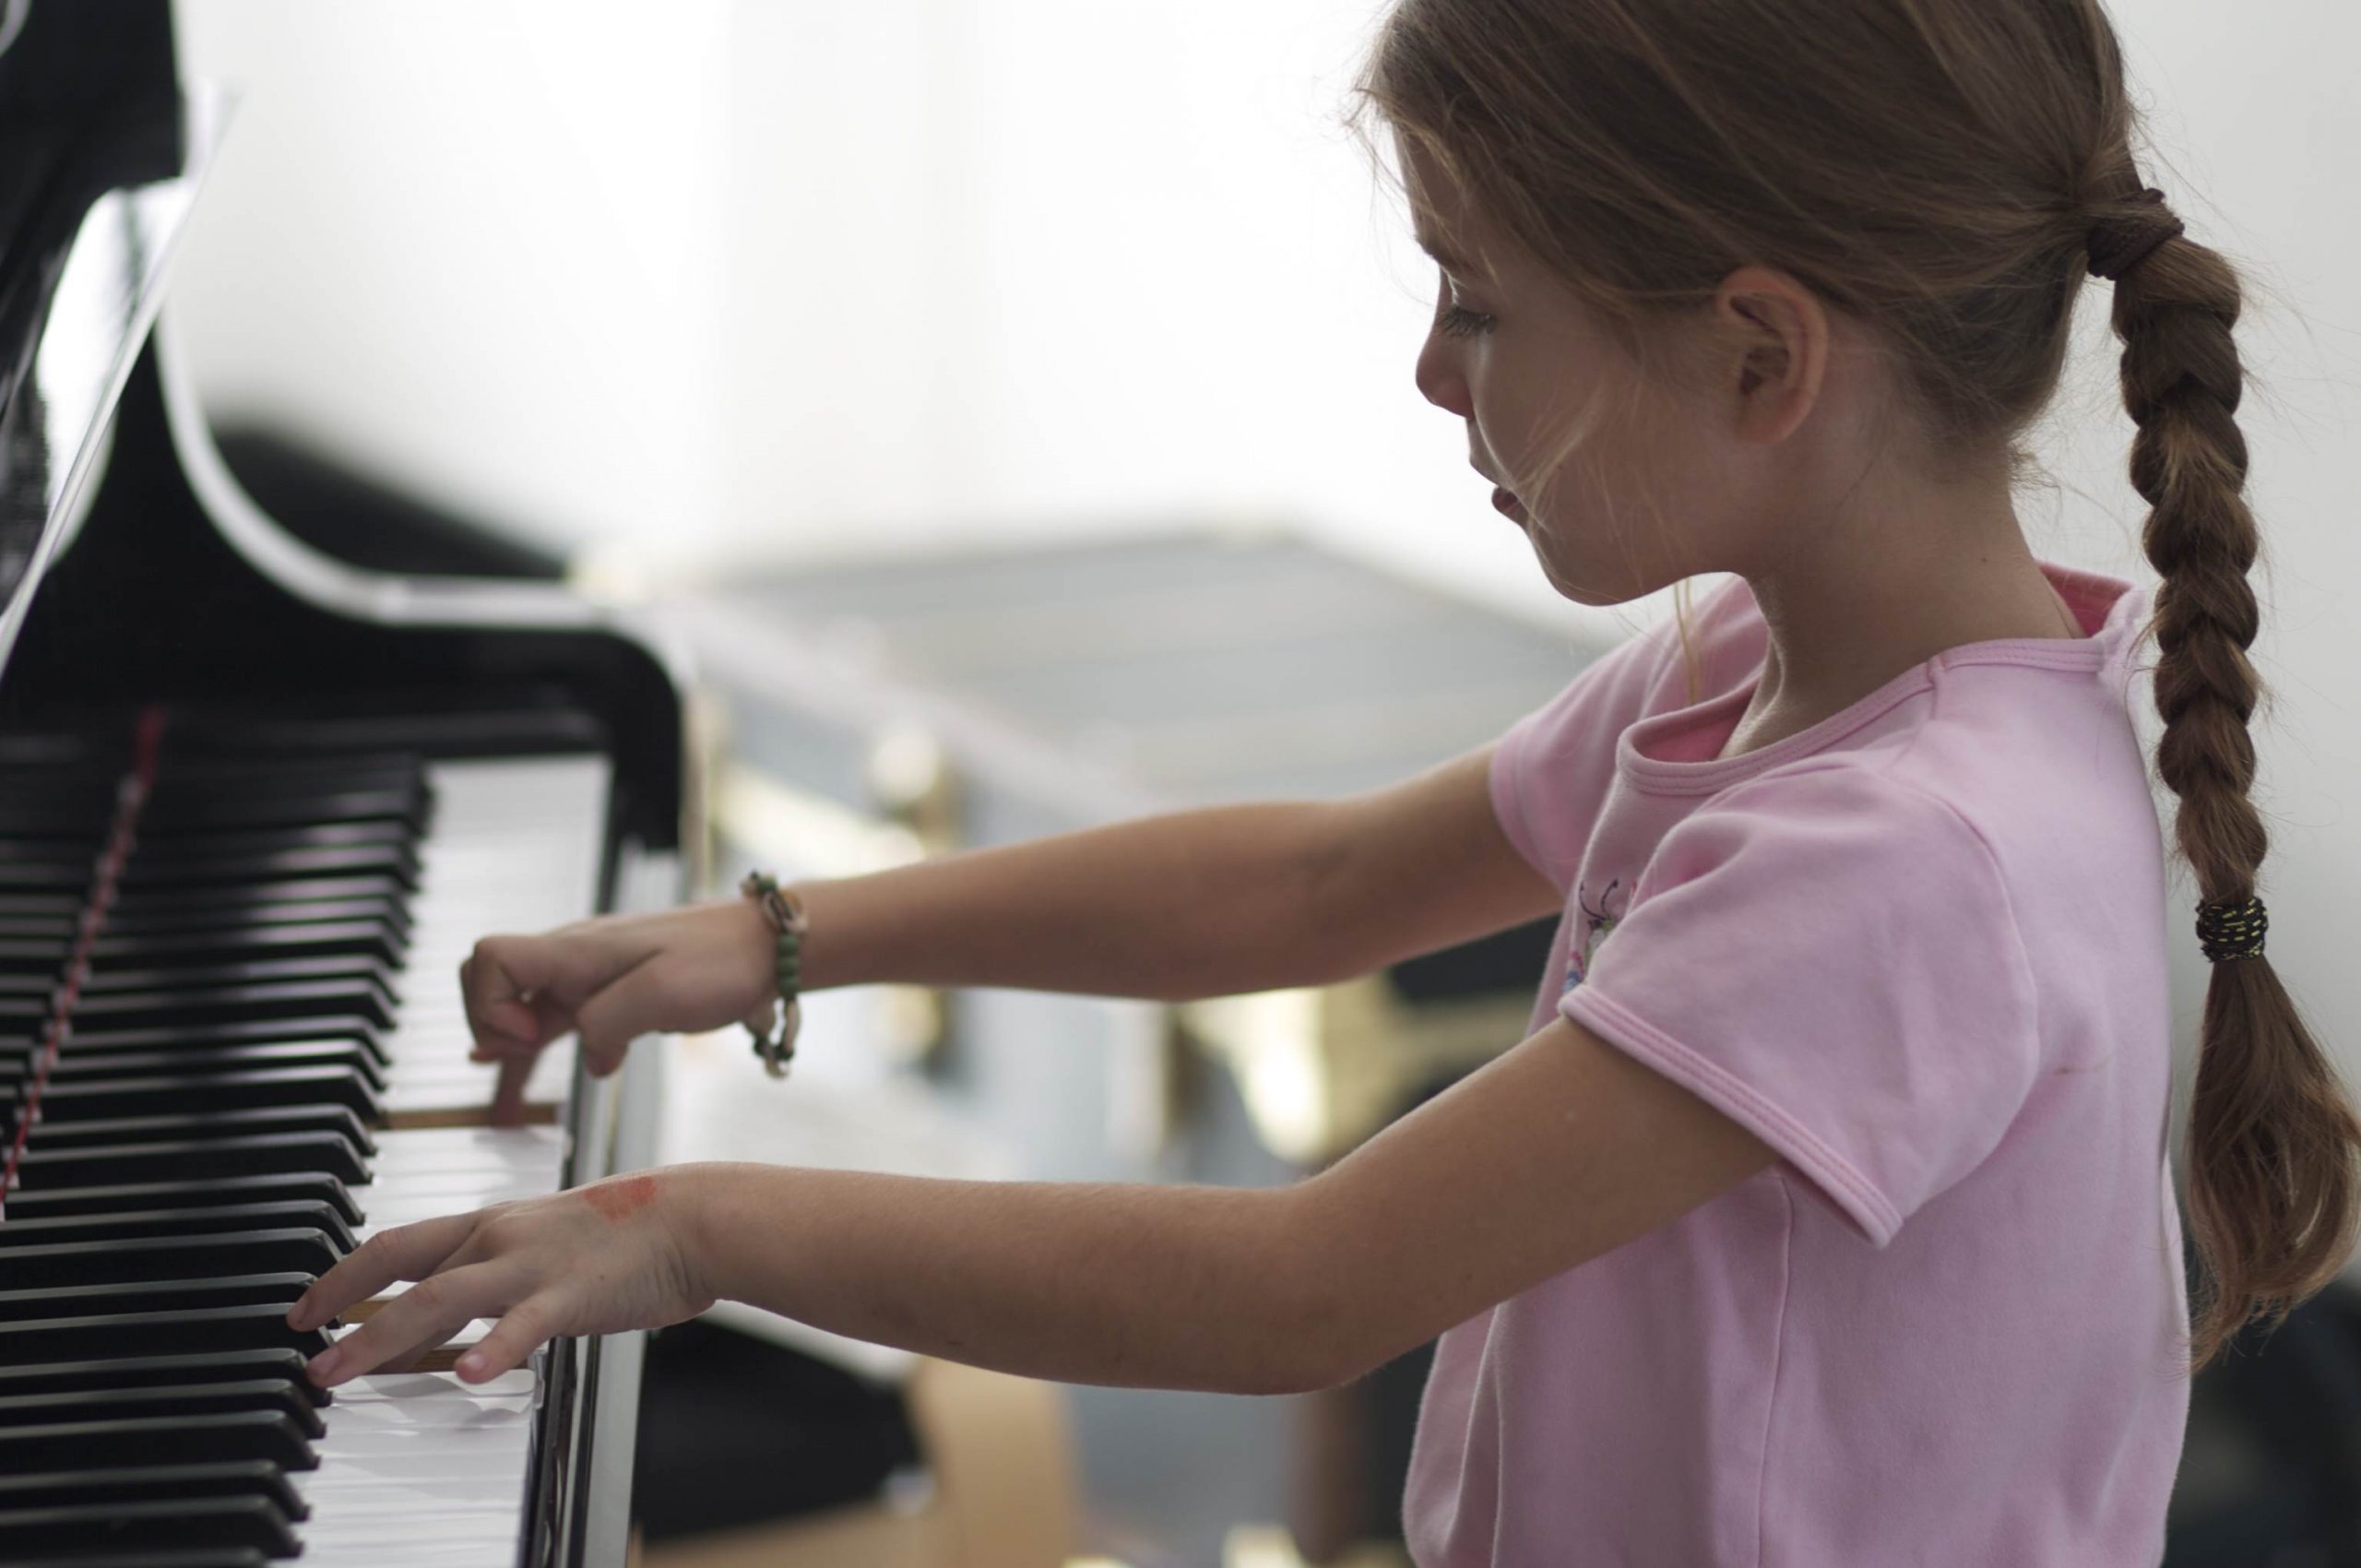 Look she plays the piano. Уроки фортепиано. Фортепиано для детей. Занятия на фортепиано для детей. Пианино для детей.